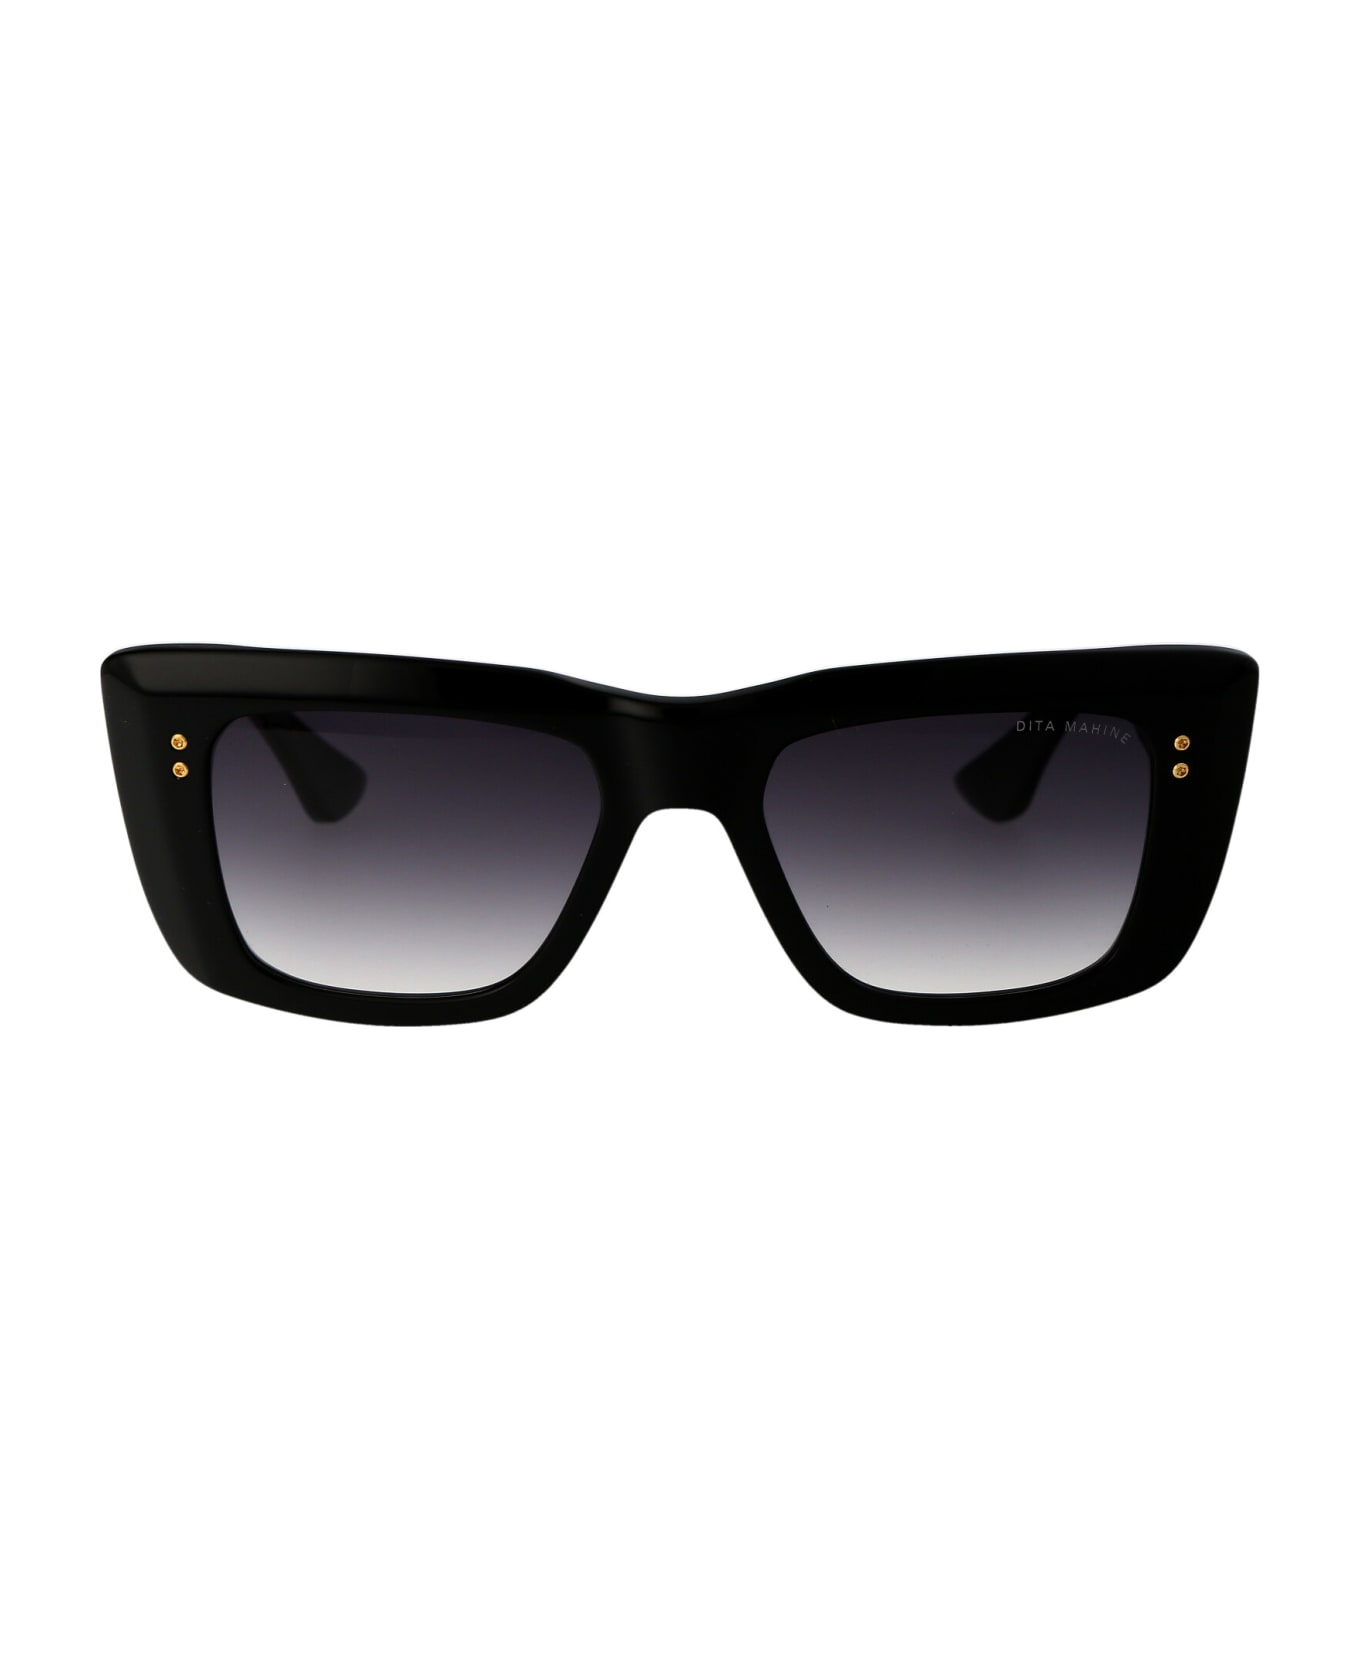 Dita Mahine Sunglasses - 01 BLACK - YELLOW GOLD W/ GREY TO CLEAR GRADIENT